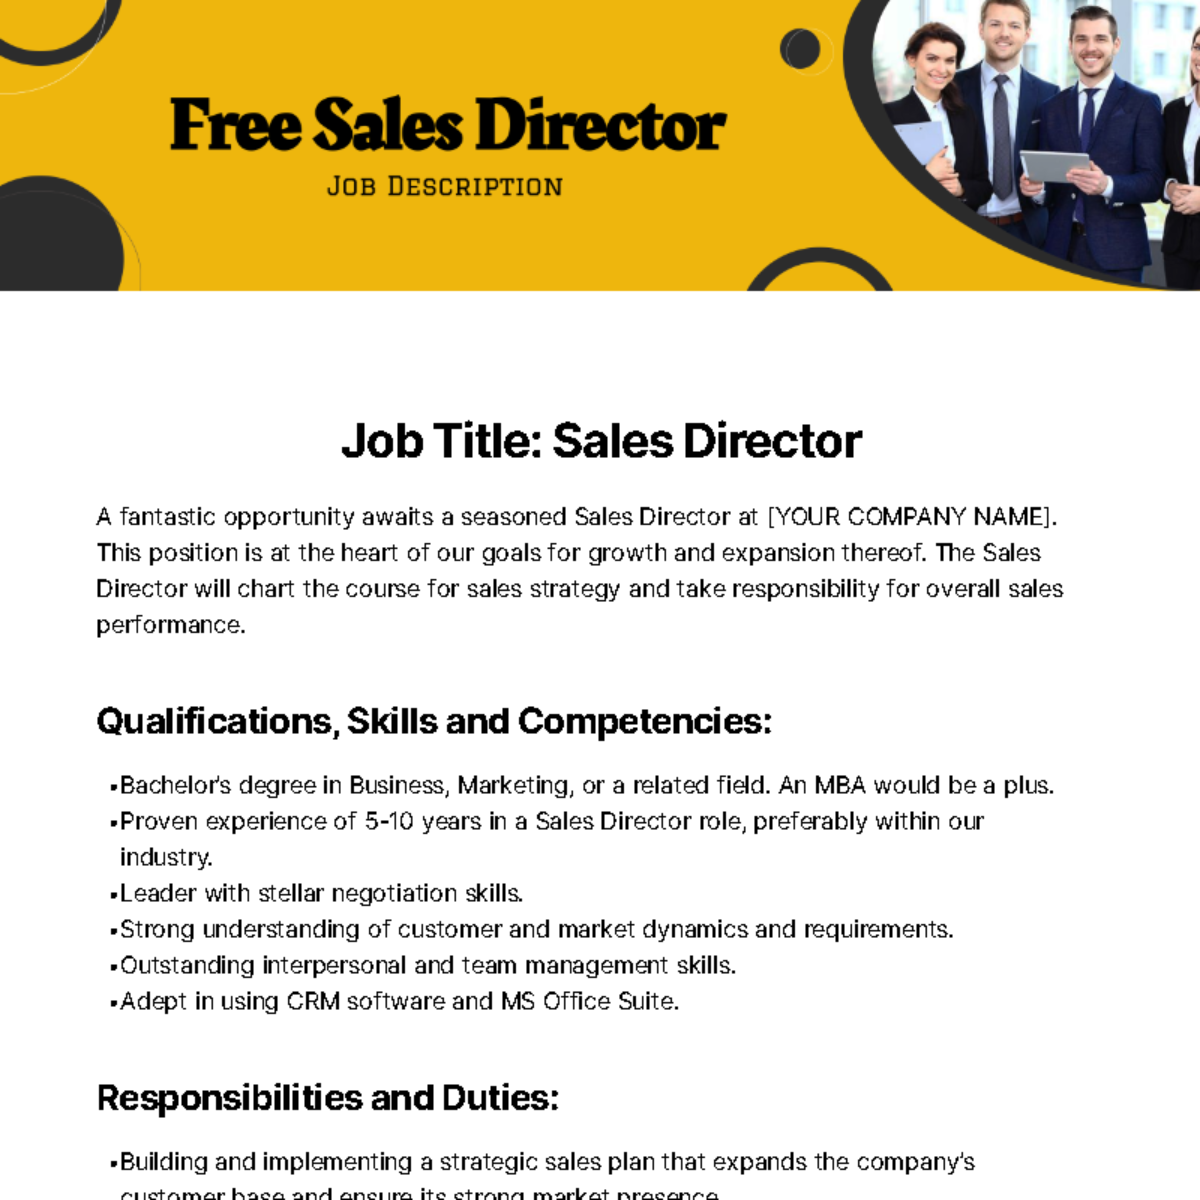 Free Sales Director Job Description Template